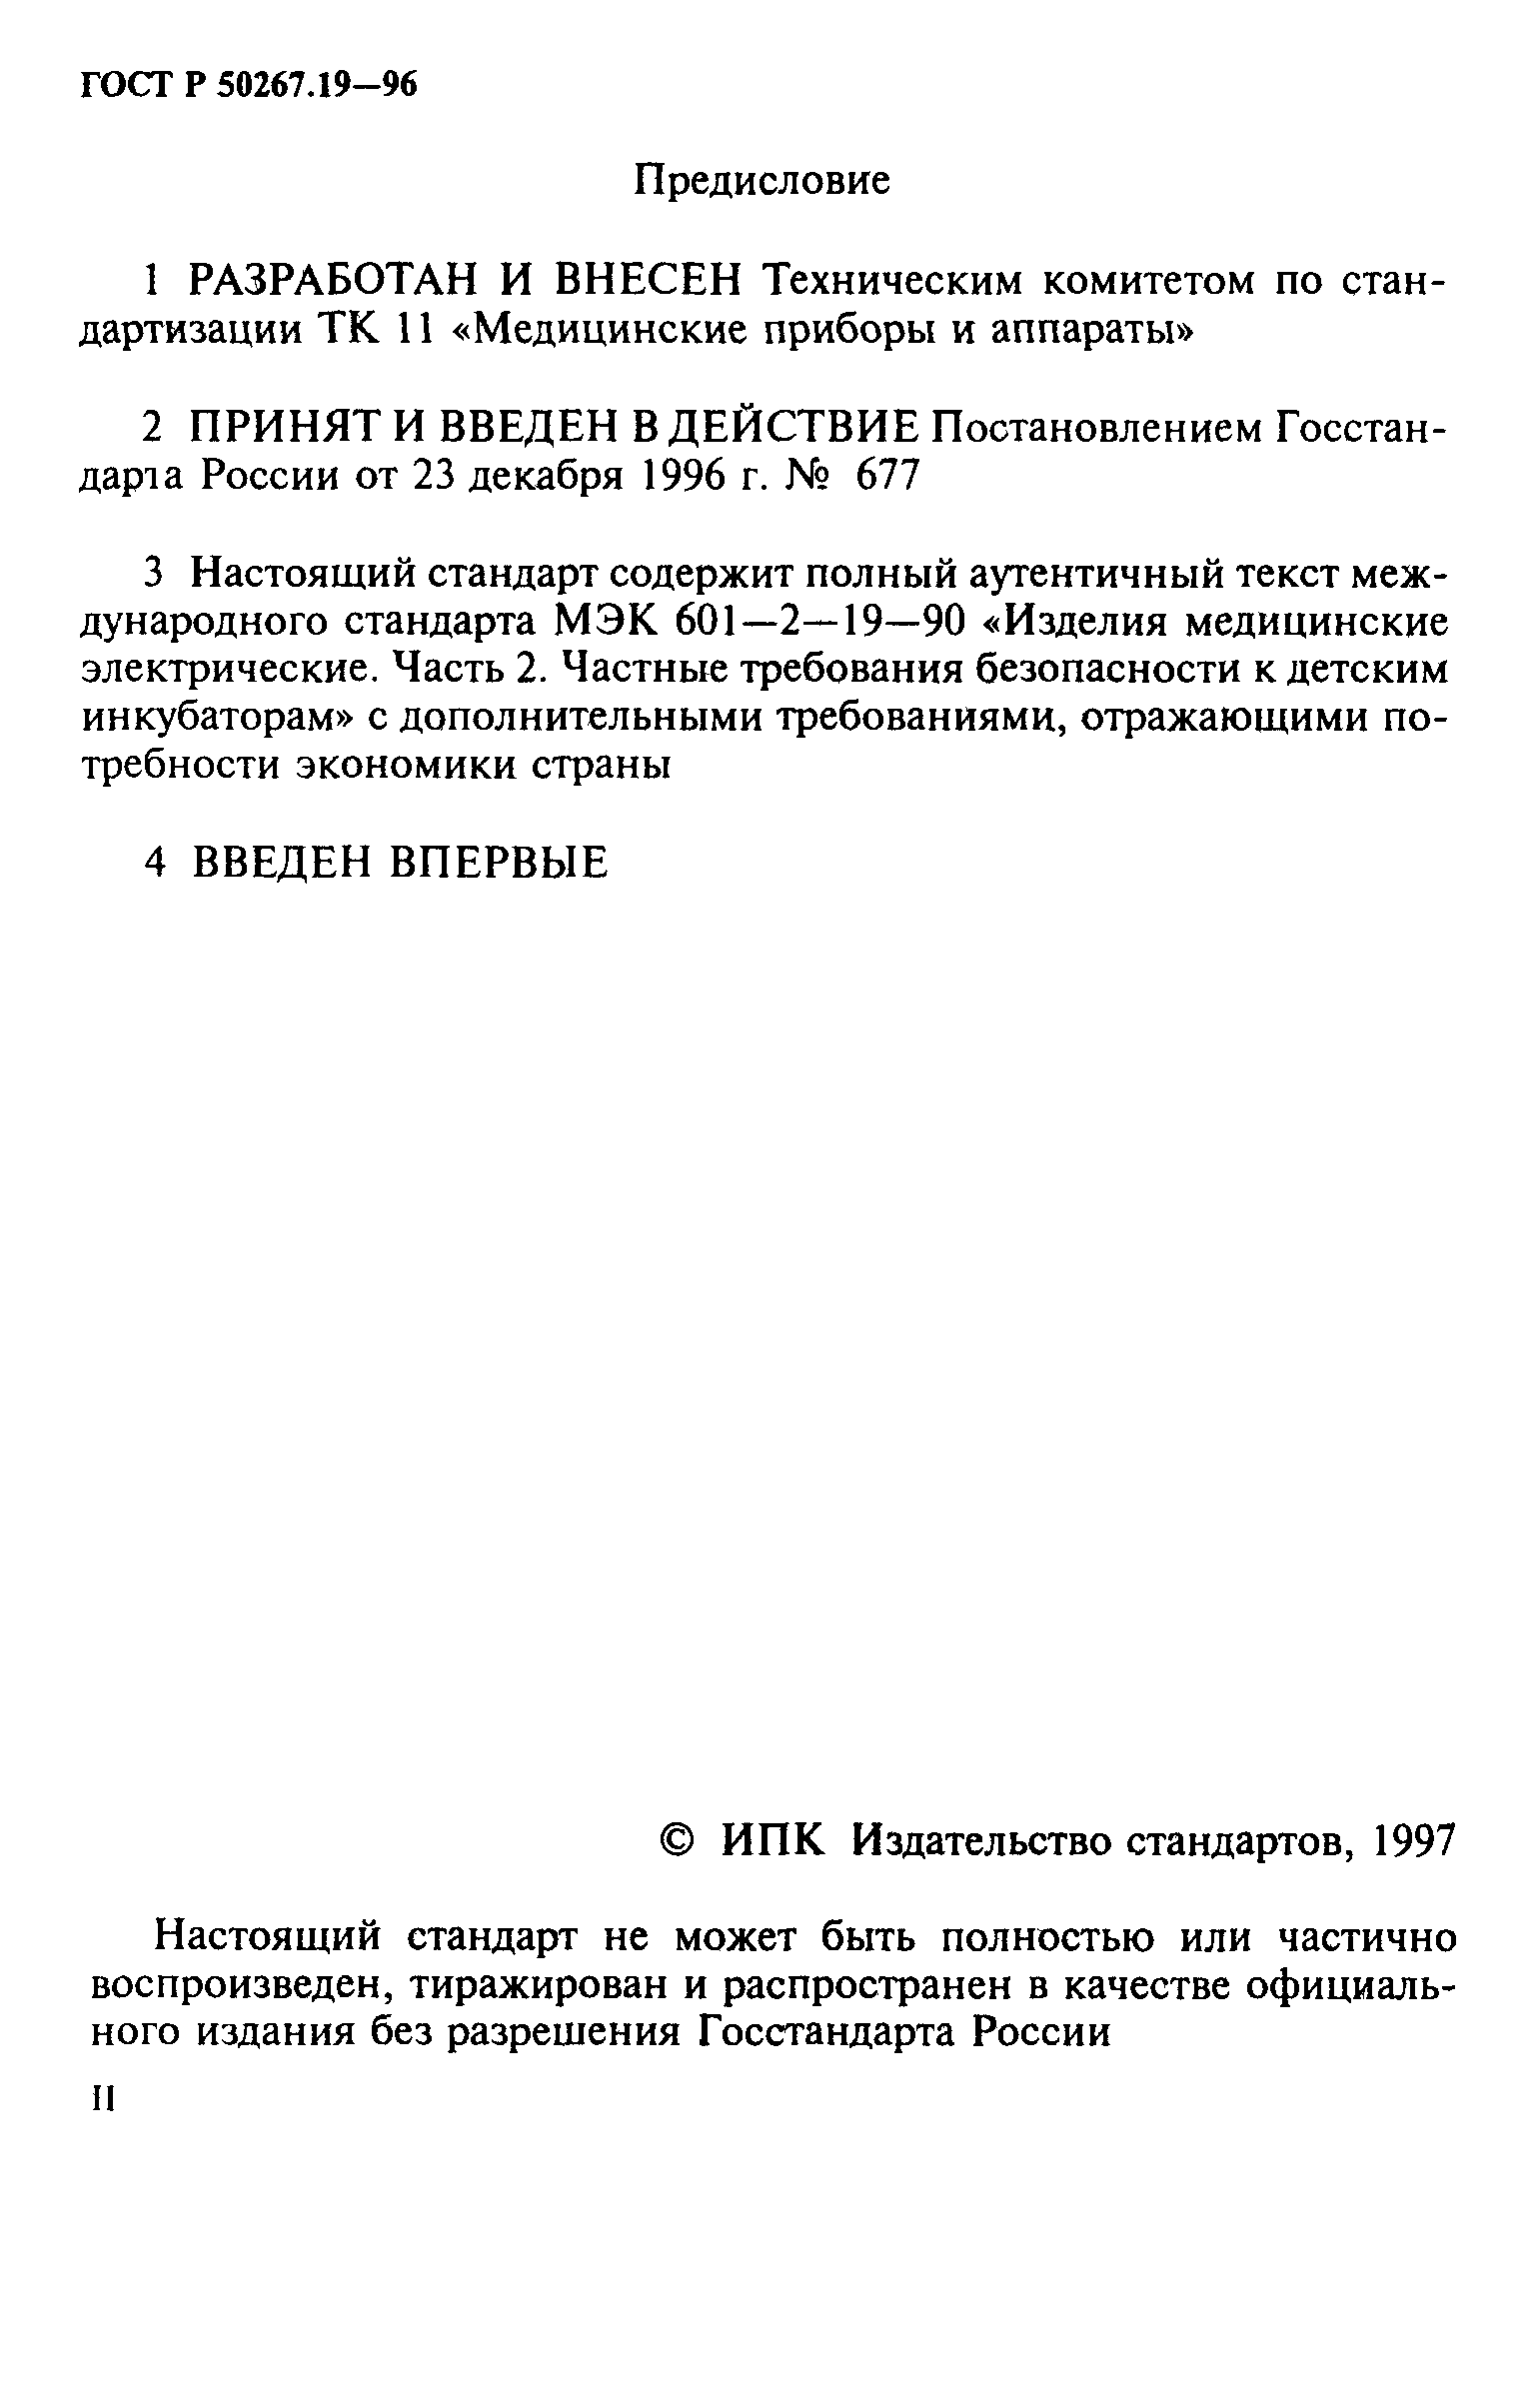 ГОСТ Р 50267.19-96